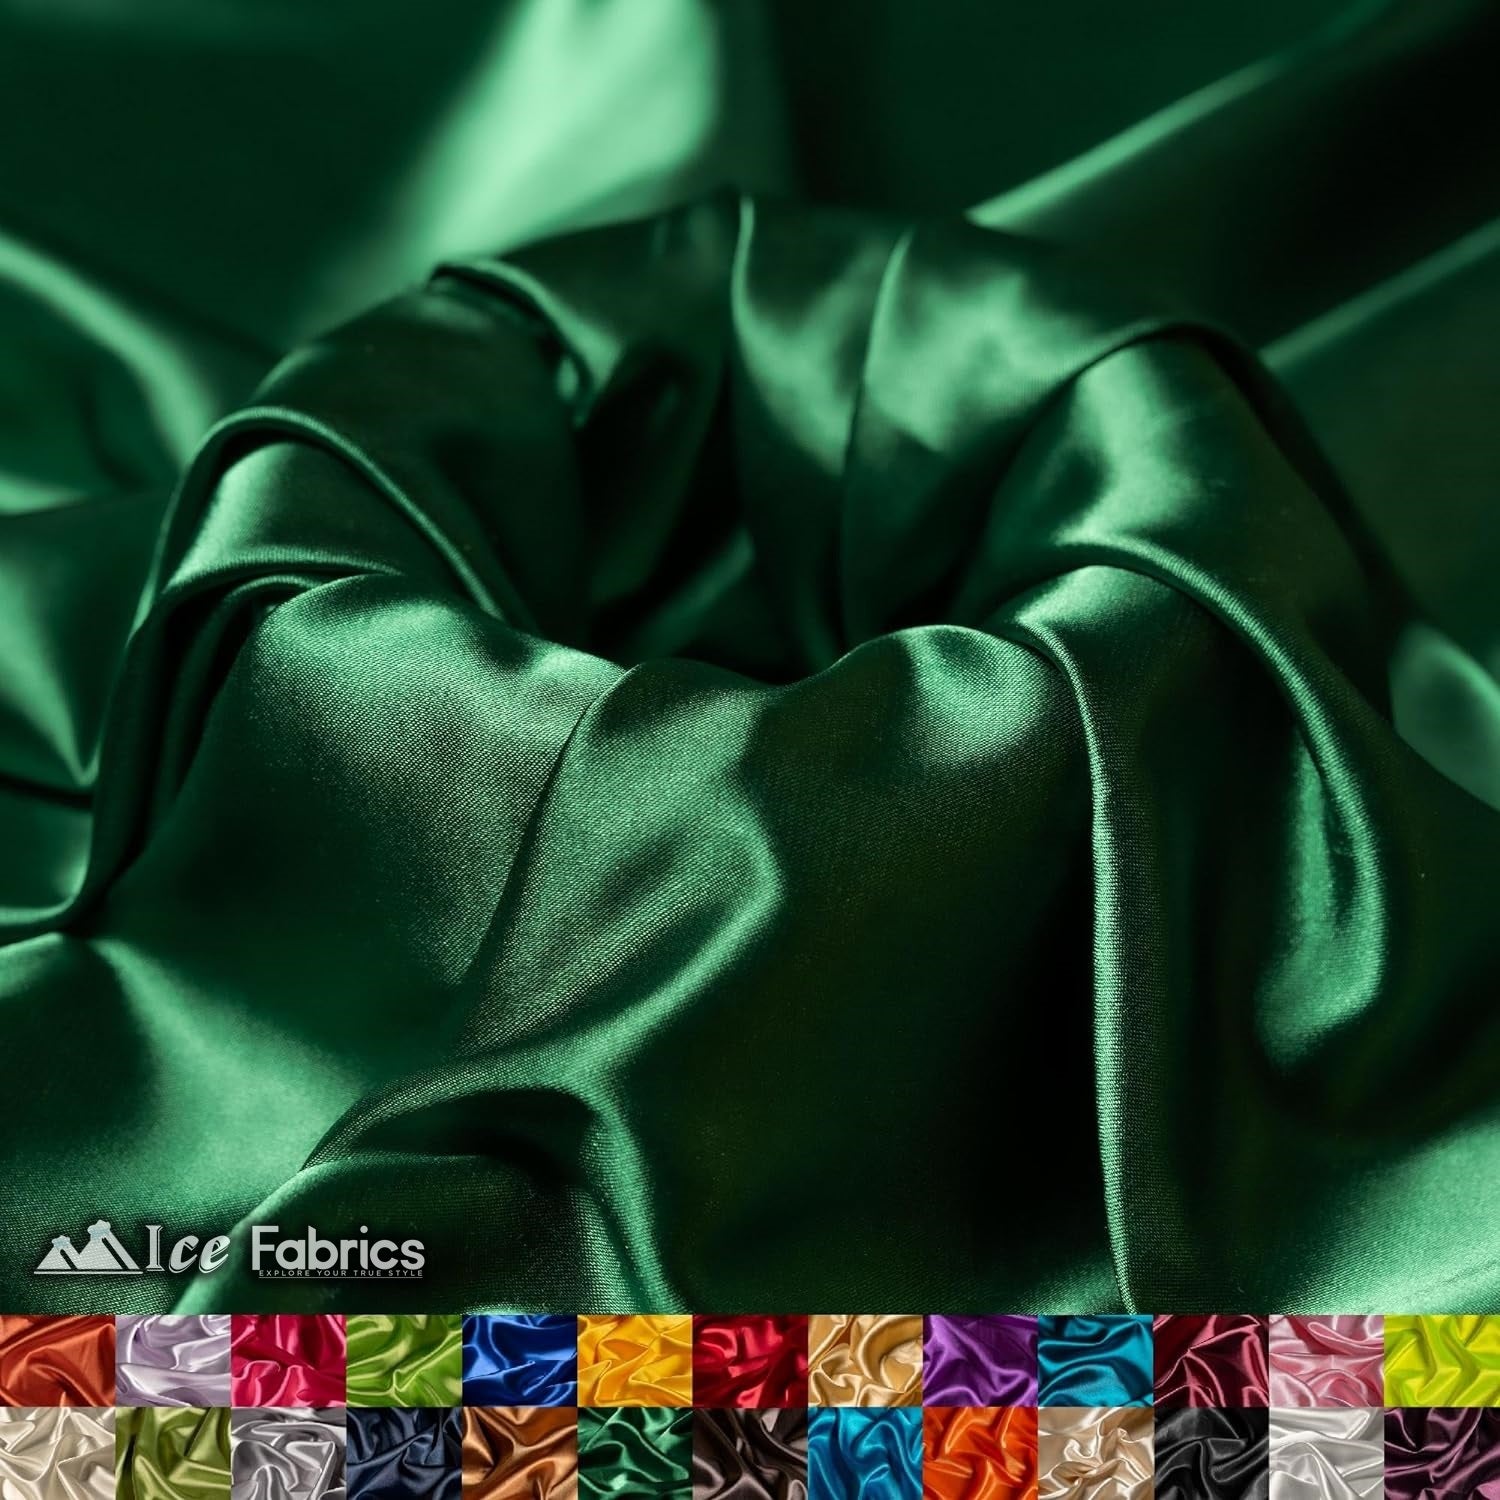 Stretch Silk Satin Fabric: Fabrics from Italy, SKU 00074982 at $8700 — Buy  Luxury Fabrics Online